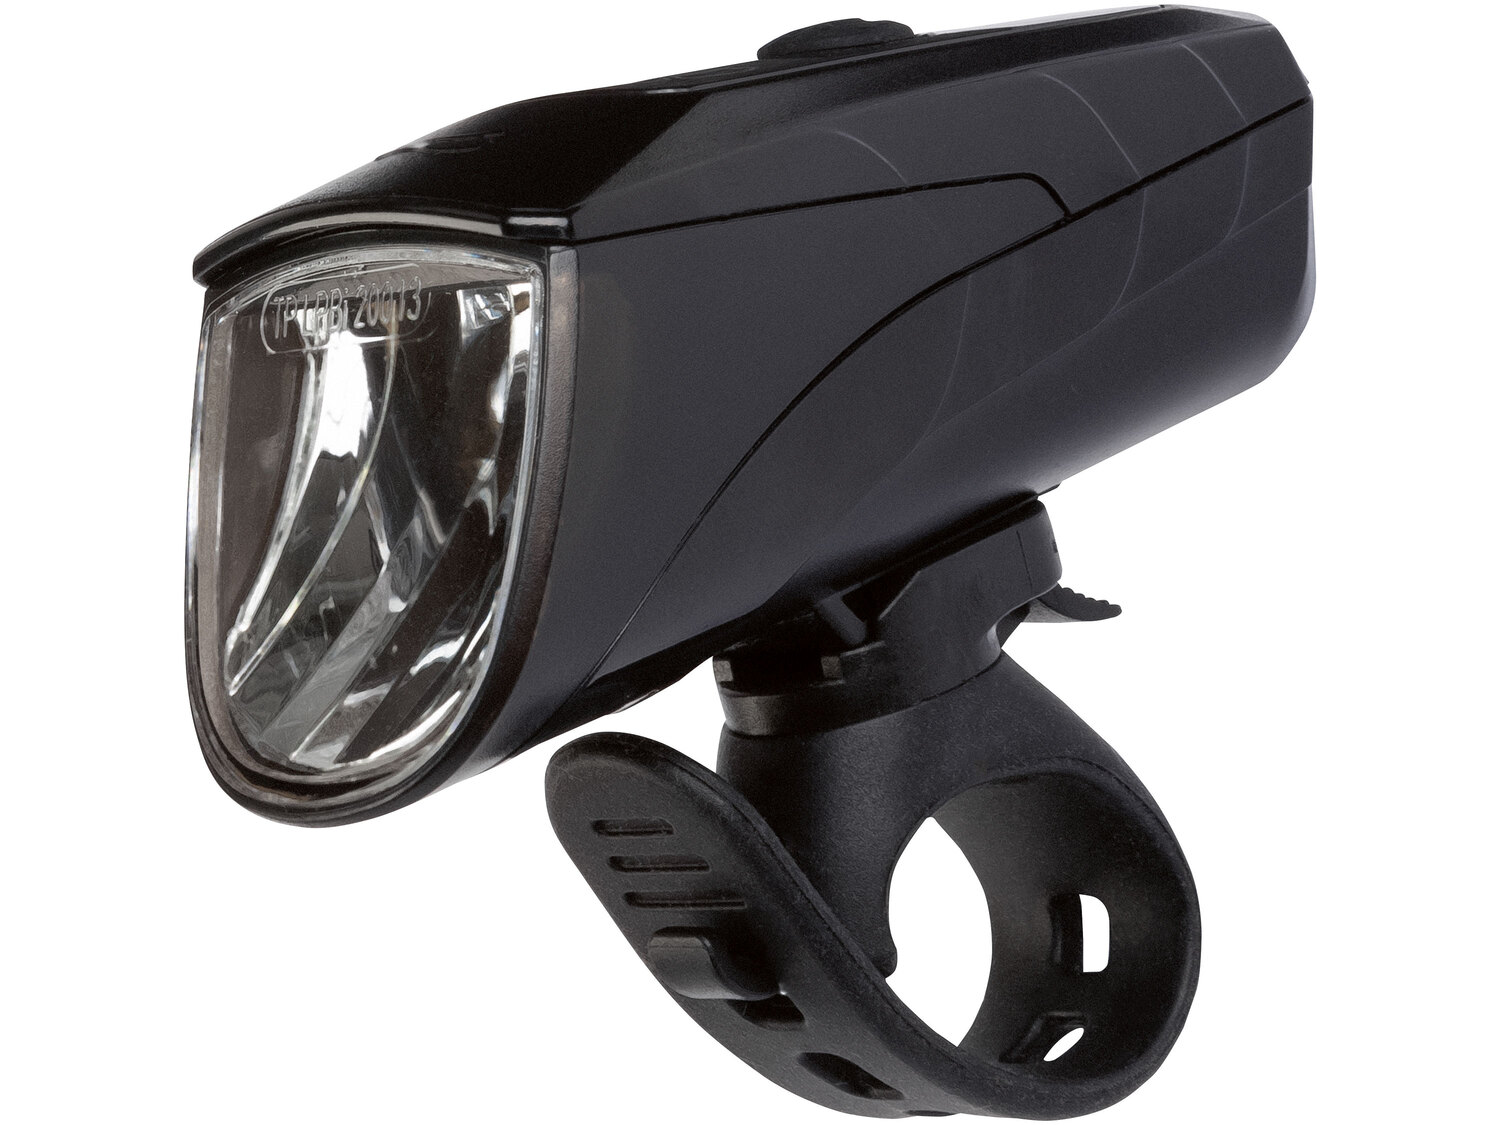 Zestaw lampek rowerowych LED Crivit, cena 69,90 PLN 
- w zestawie: mocne jasne ...